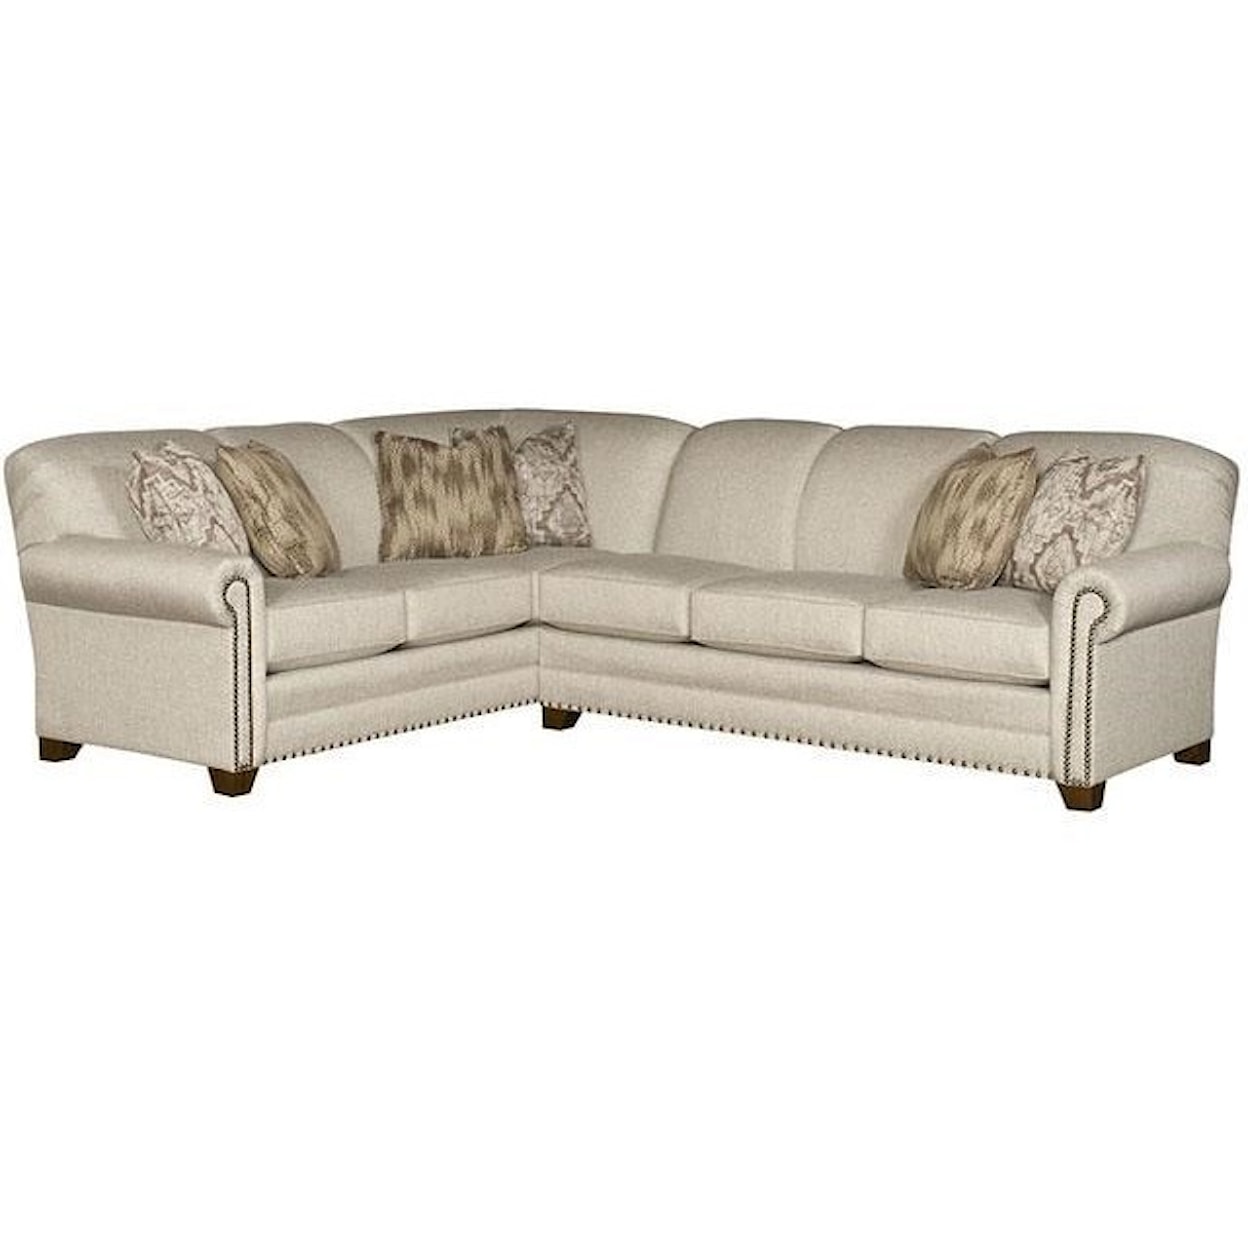 King Hickory Annika Sectional Sofa